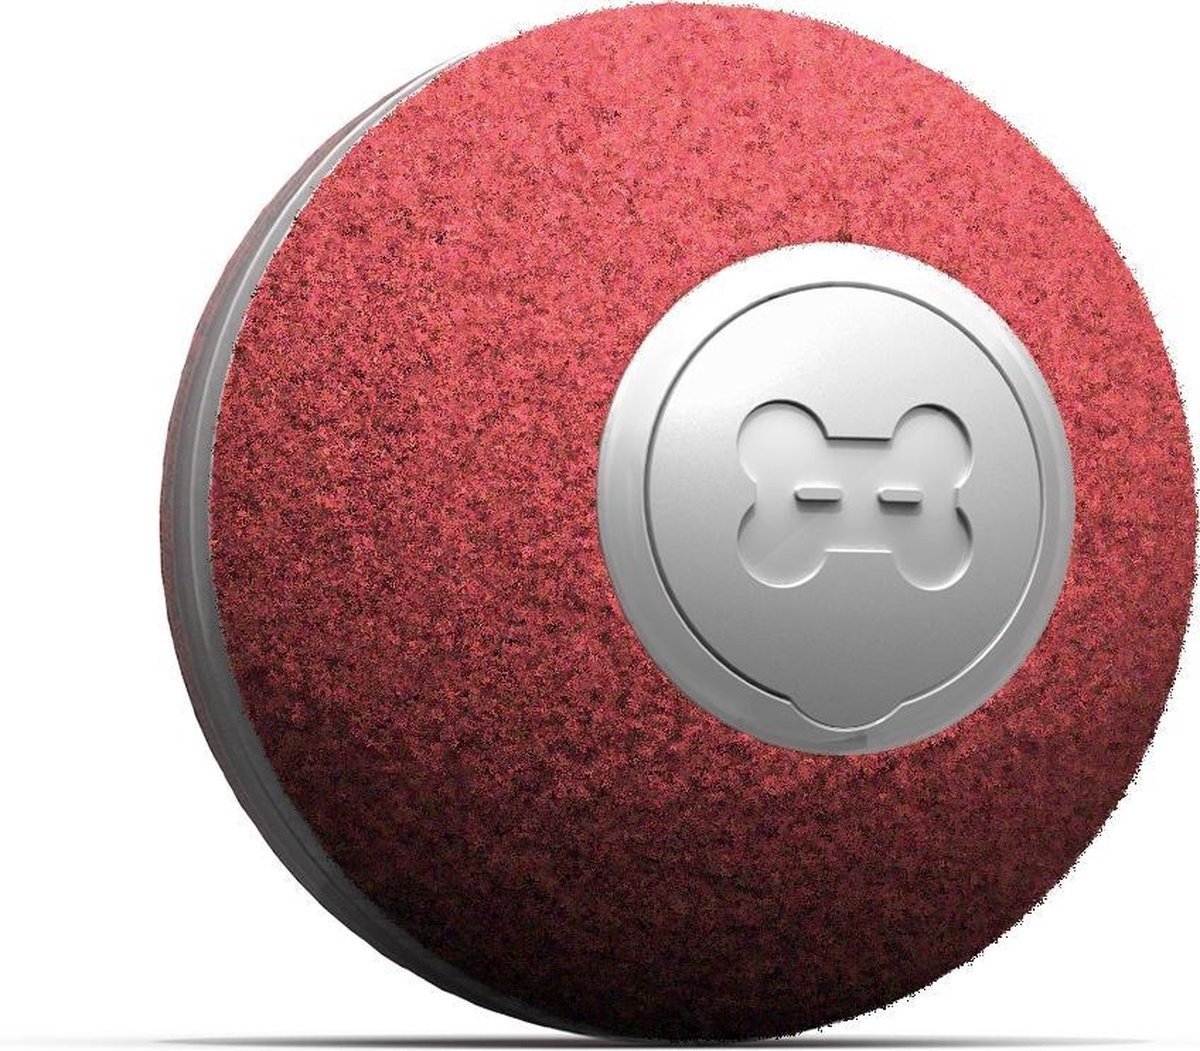 USB Mini günstig Kaufen-Cheerble mini ball 2.0 - Intelligenter interaktiver selbstrollender Ball für Katzen - 3 Spielmodi - Katzenspielzeug - USB aufladbar - Rot. Cheerble mini ball 2.0 - Intelligenter interaktiver selbstrollender Ball für Katzen - 3 Spielmodi - Katzen